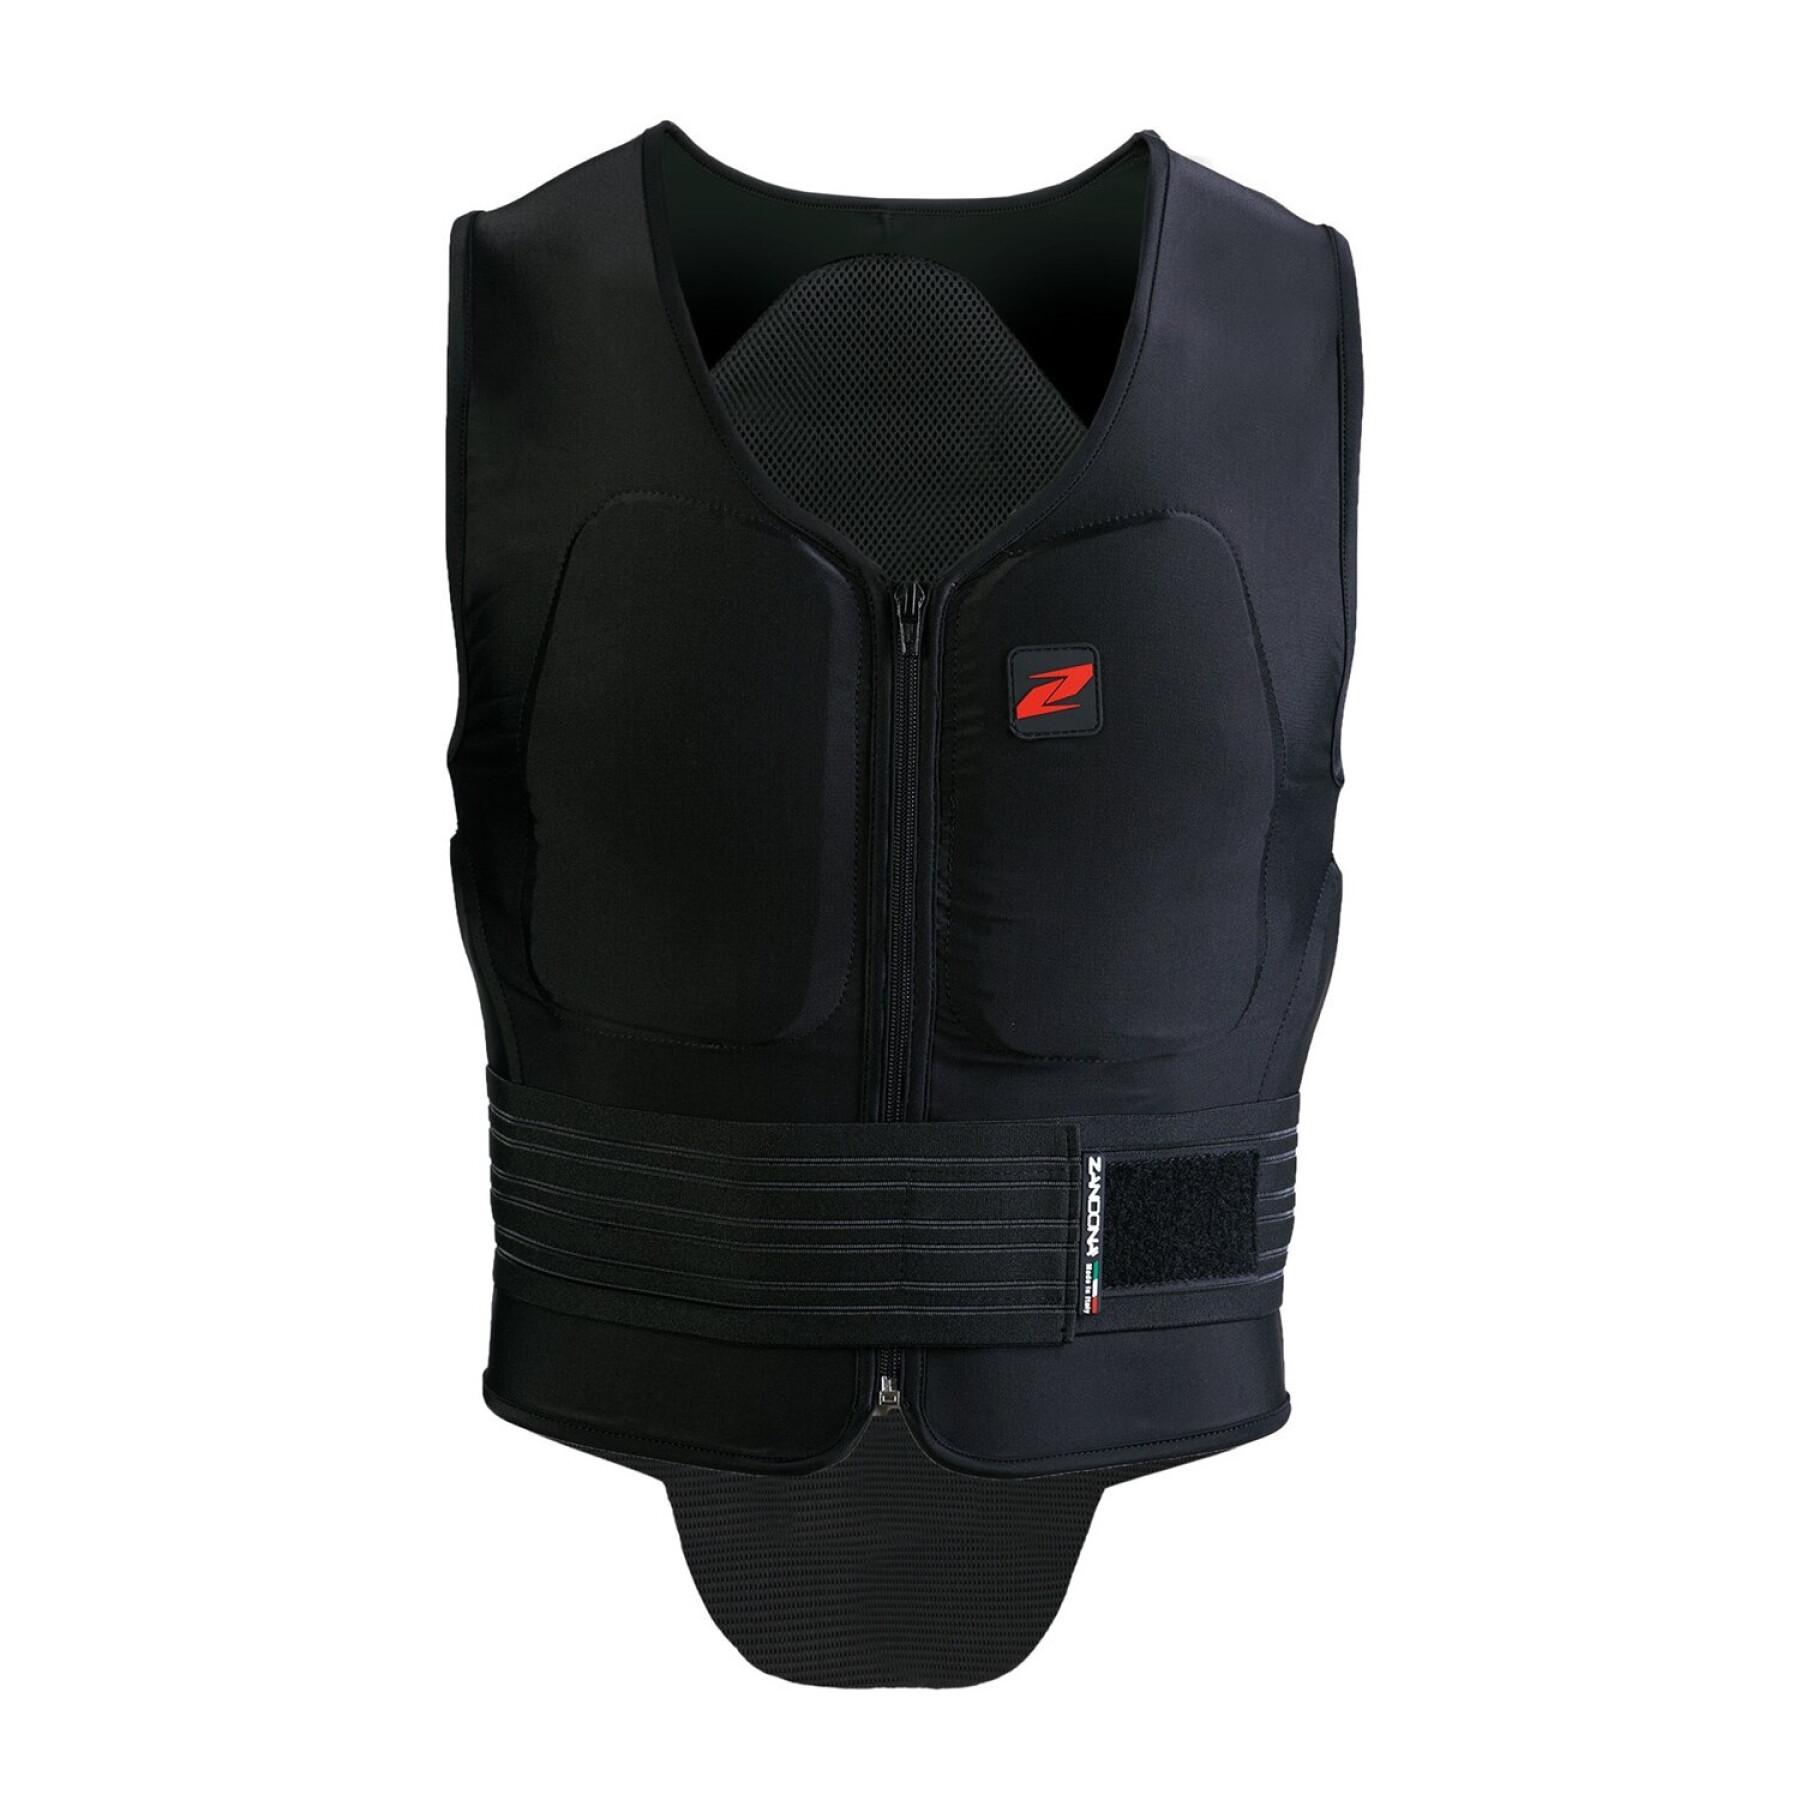 Riding protection vest Zandona Soft Pro X6